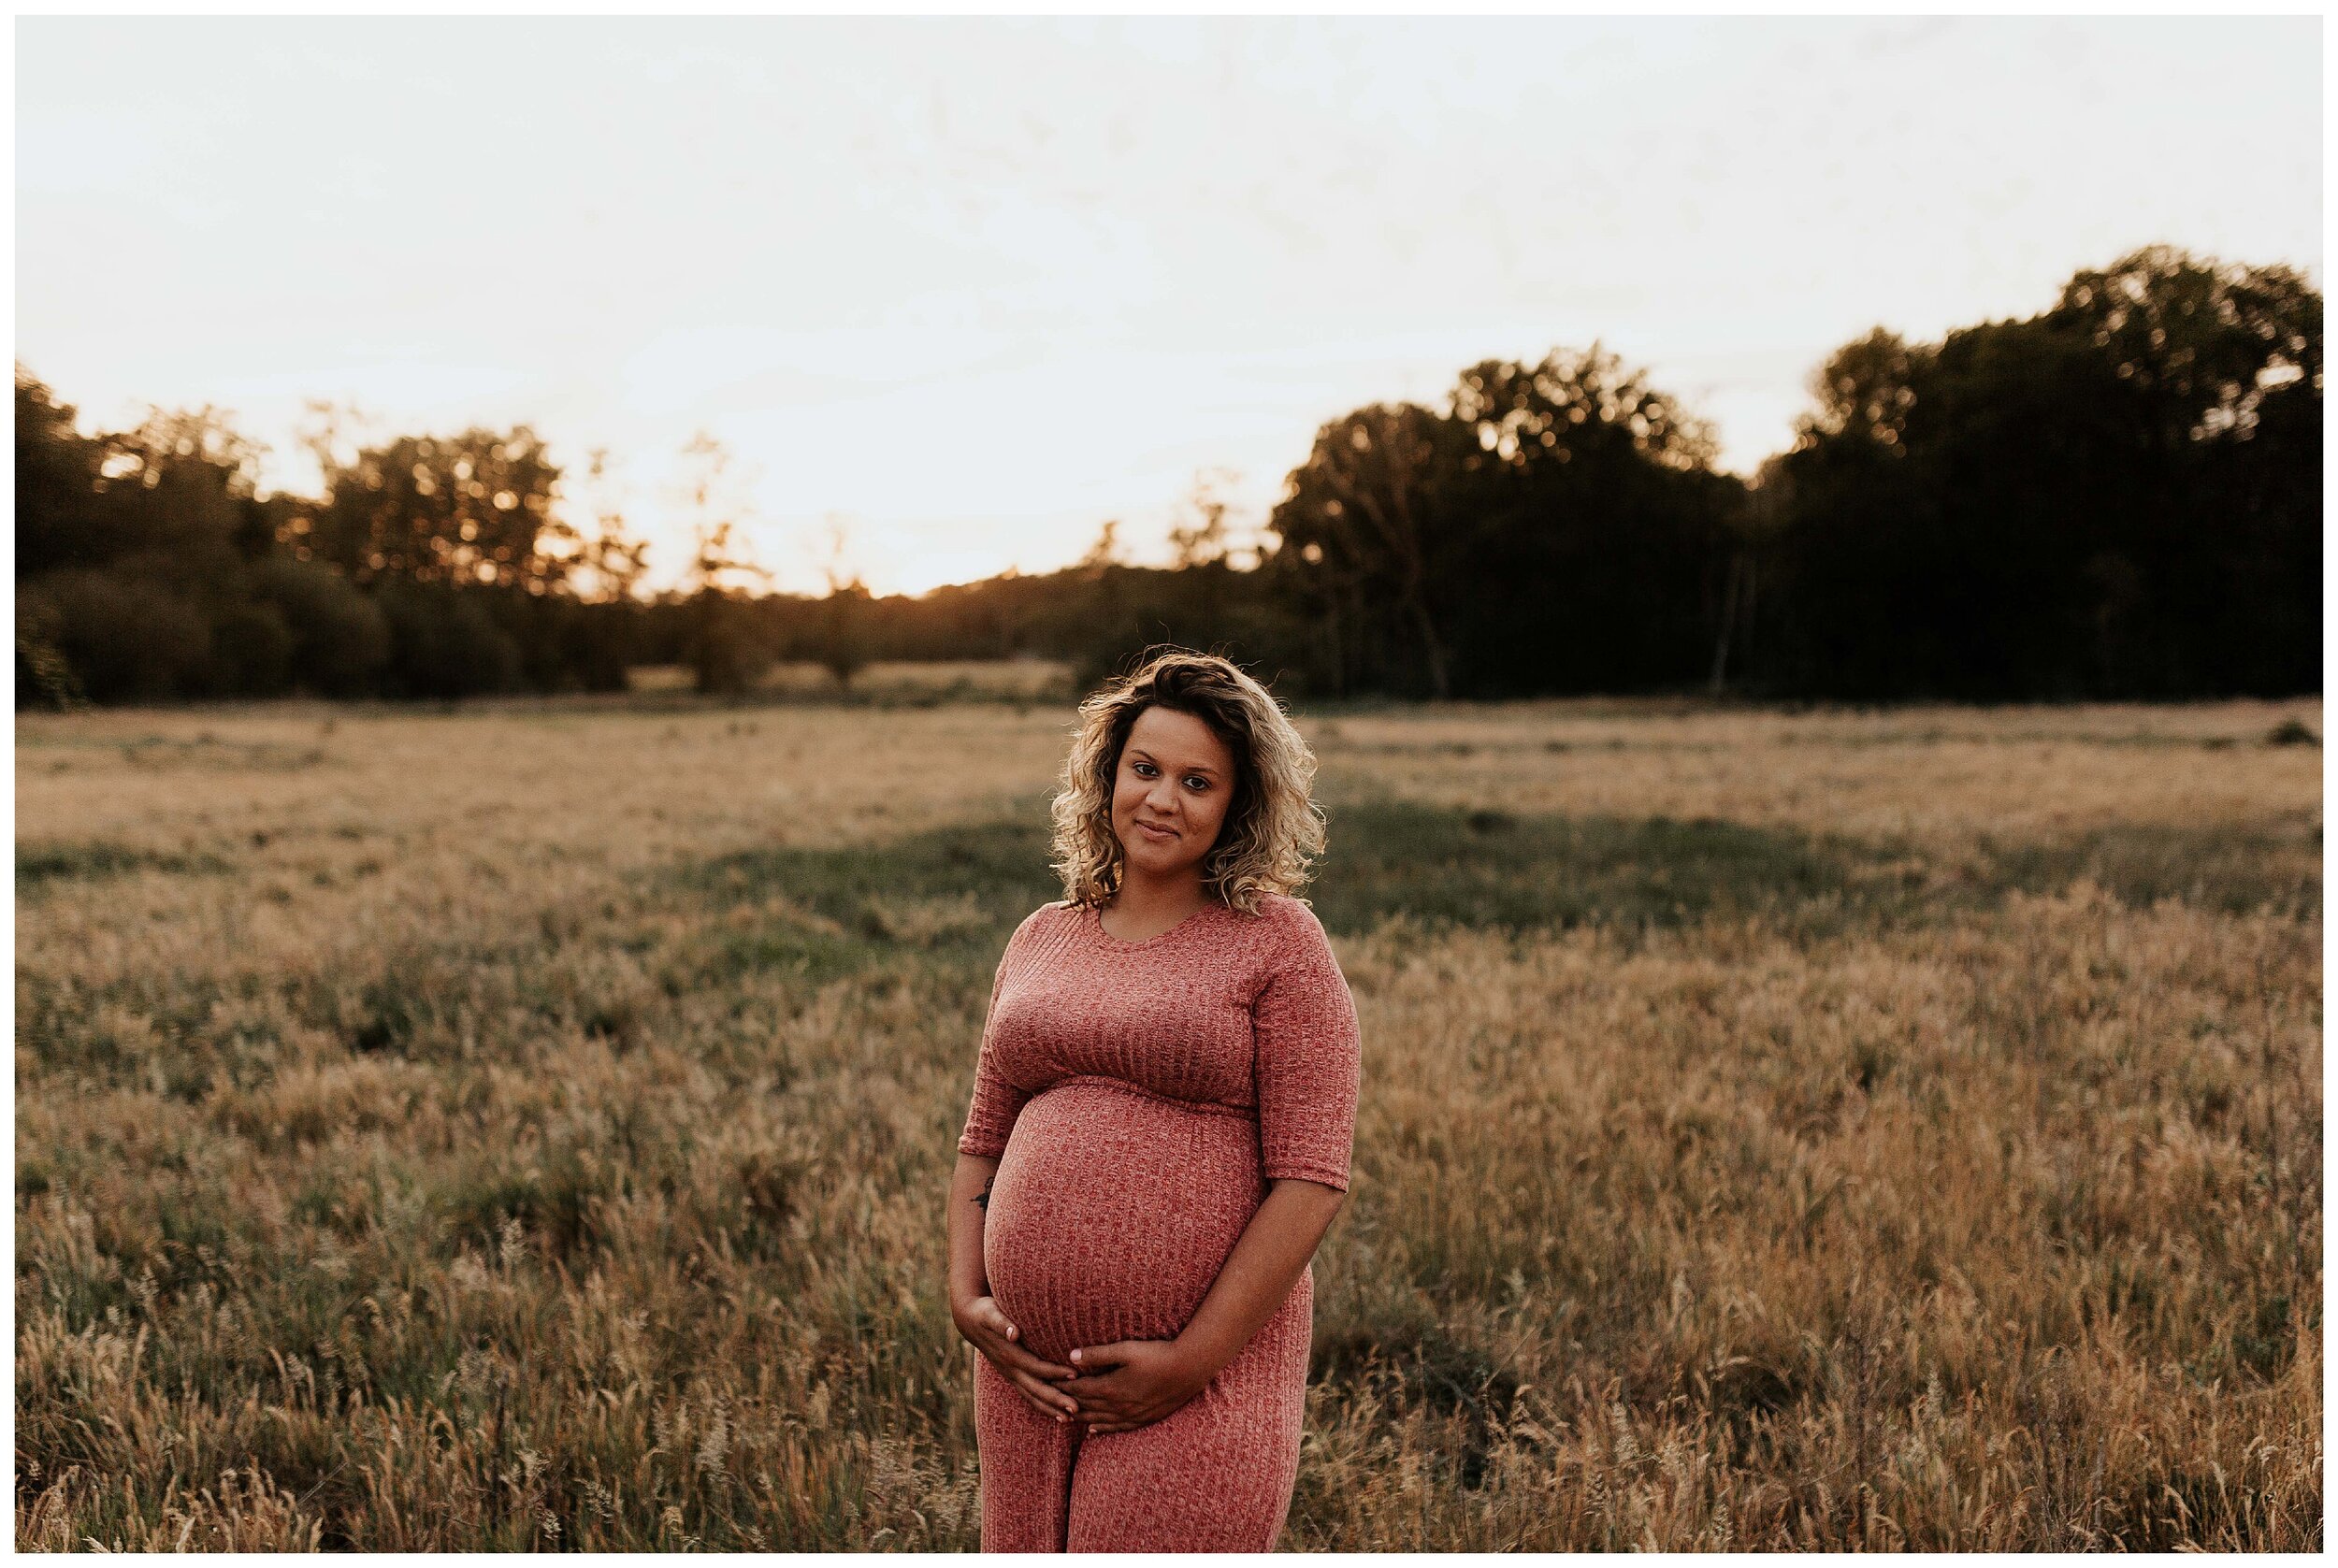 zwangerschapsfotografie-zwangerschapsshoot-zwangerschapsaankondiging-lisahelsenphotography-herentals-westerlo-herselt-kempen-vlaanderen_0006.jpg